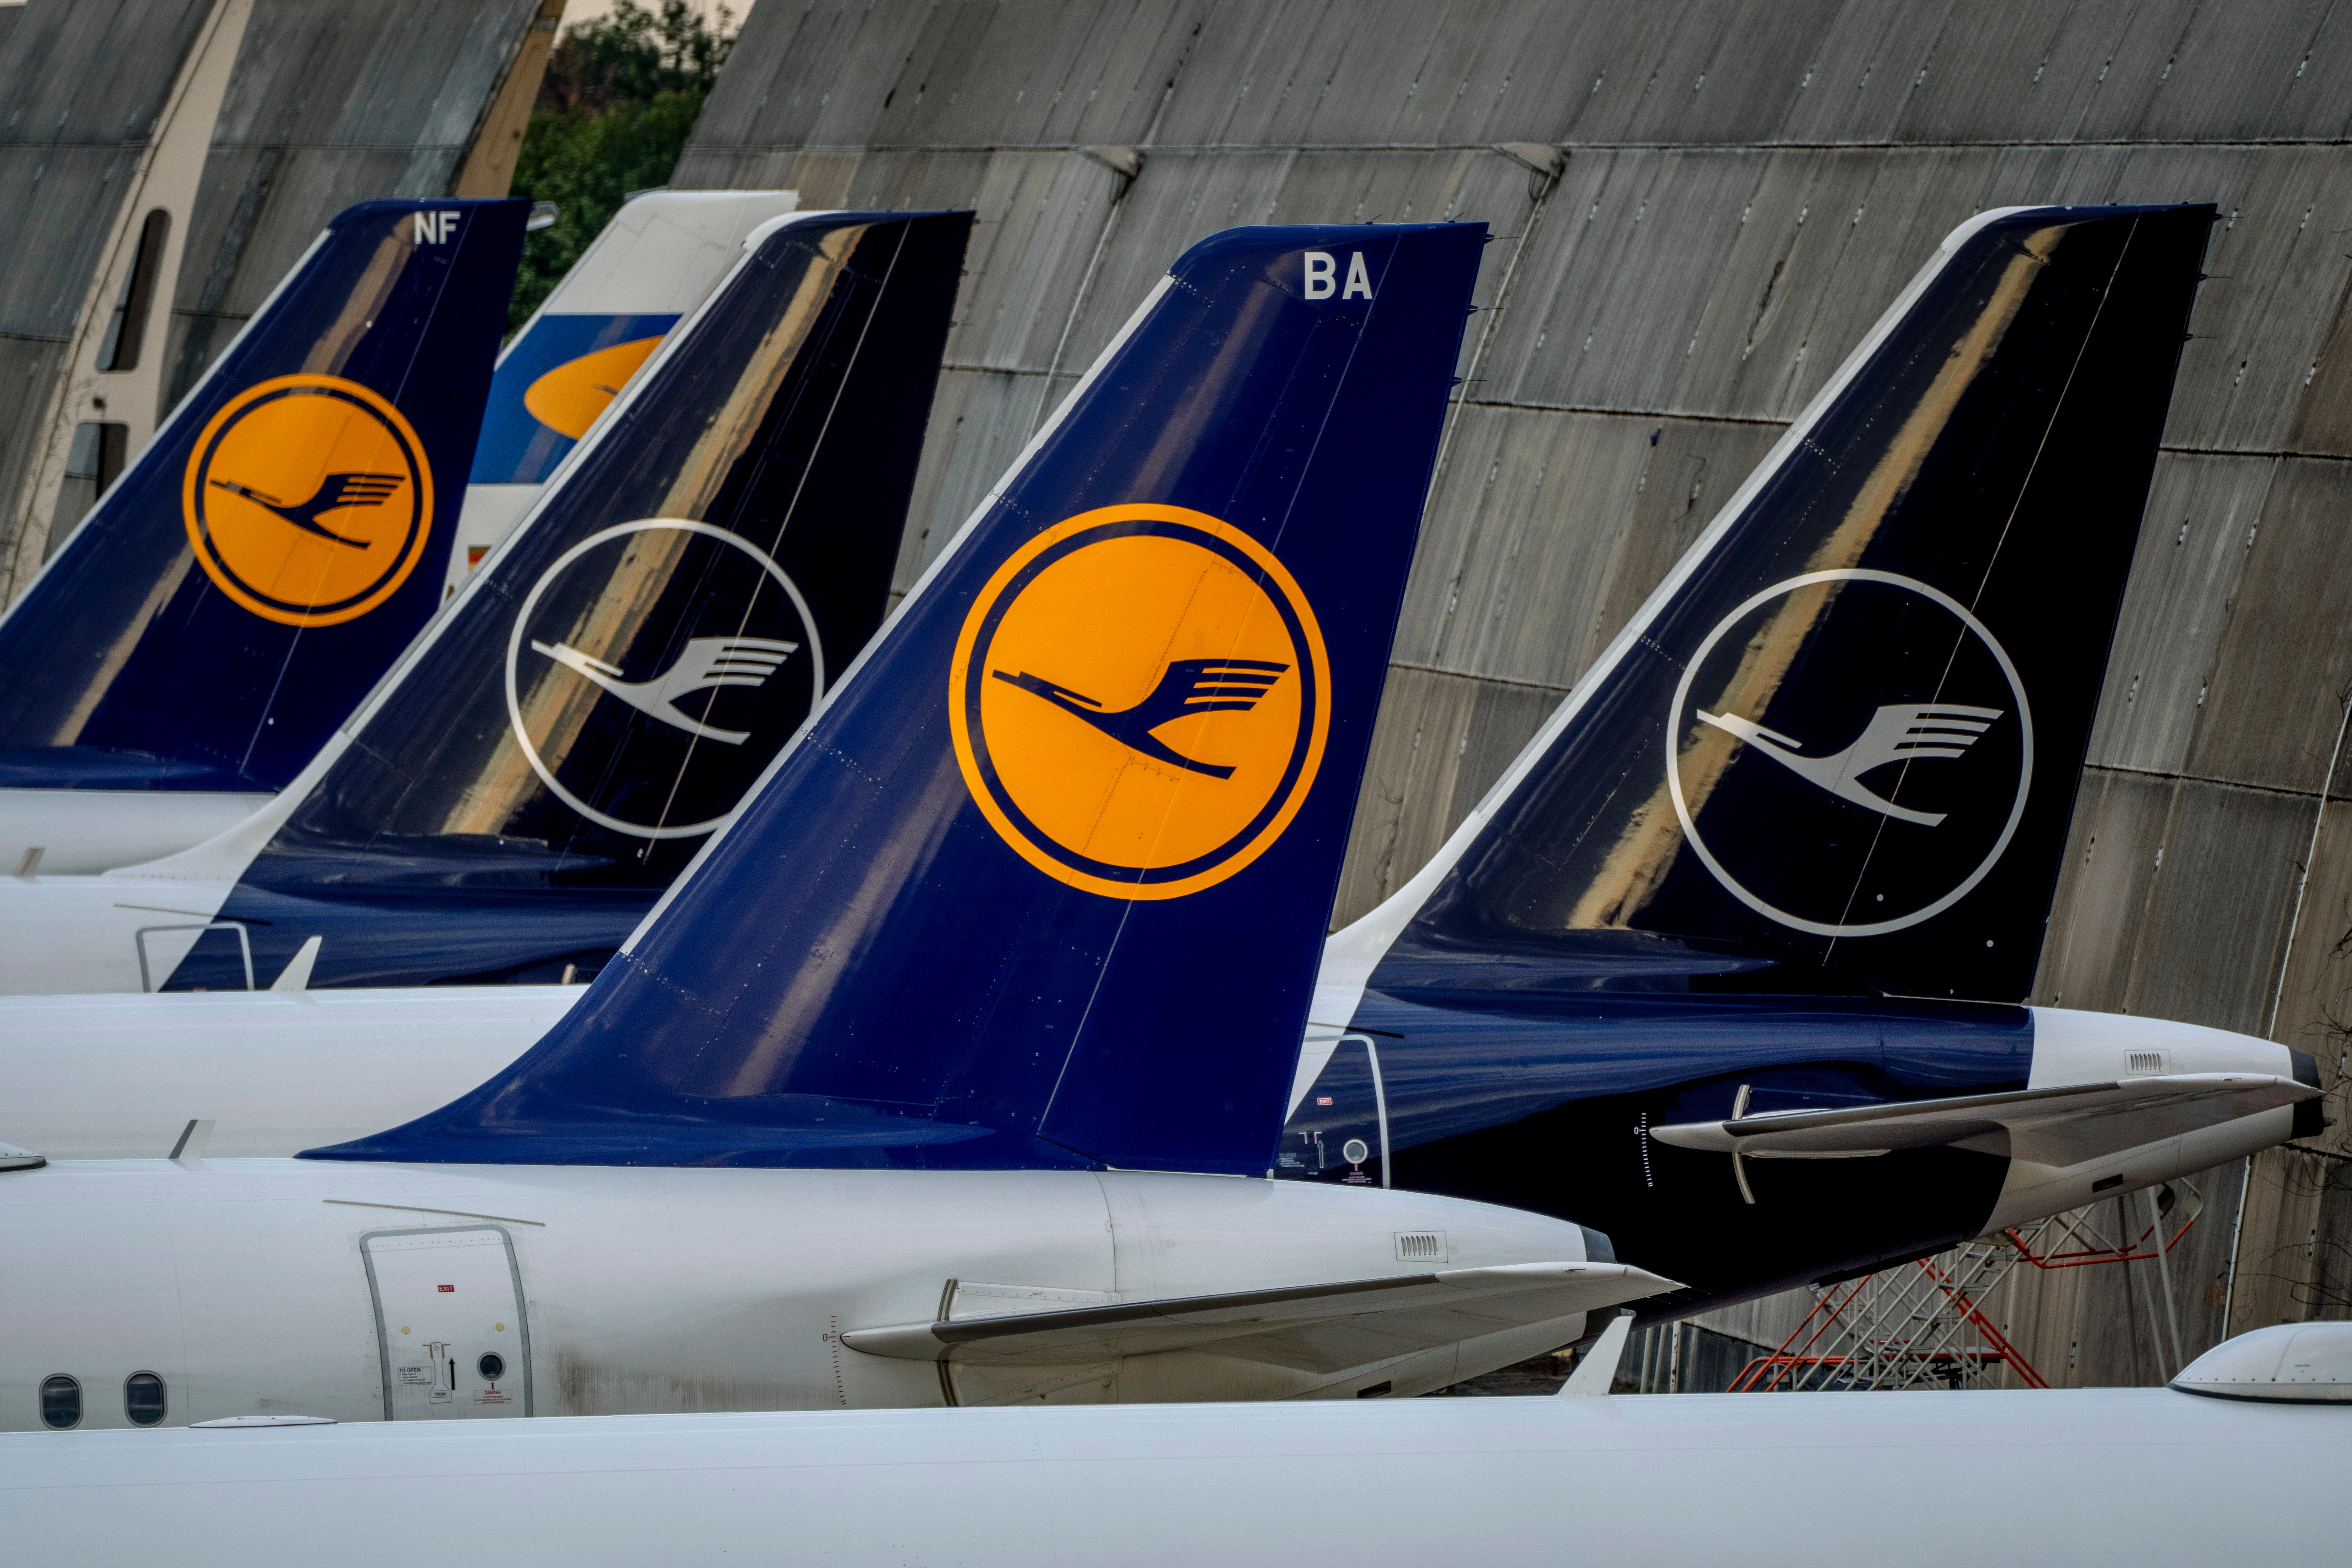 Germany Lufthansa Technical Problems